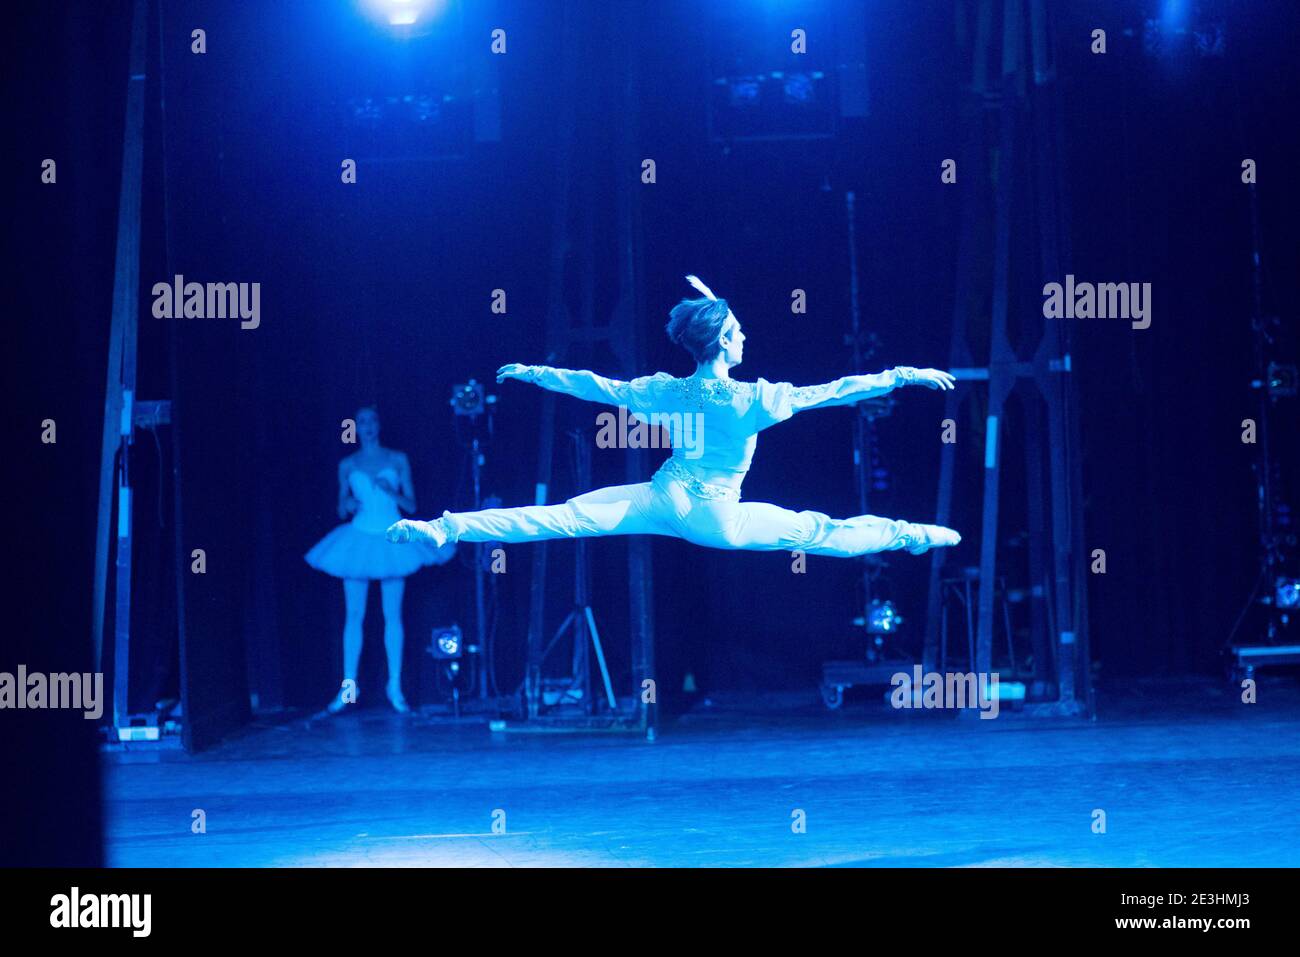 Timur Askerov doing a ballet jump Stock Photo